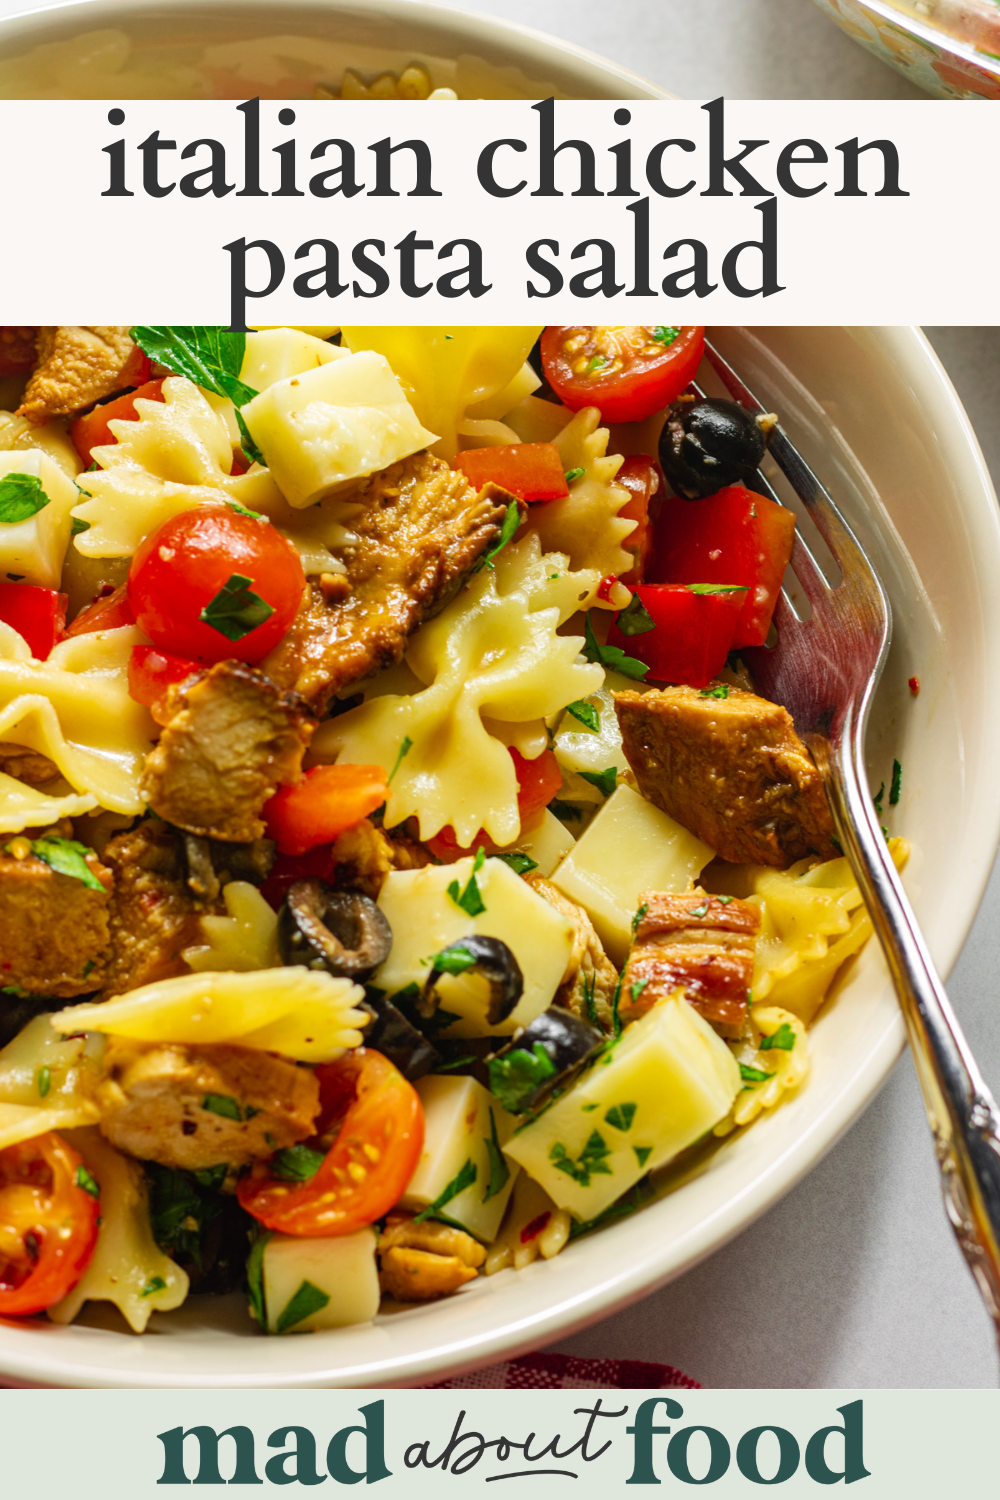 Image for pinning Italian Chicken Pasta Salad recipe on pinterest